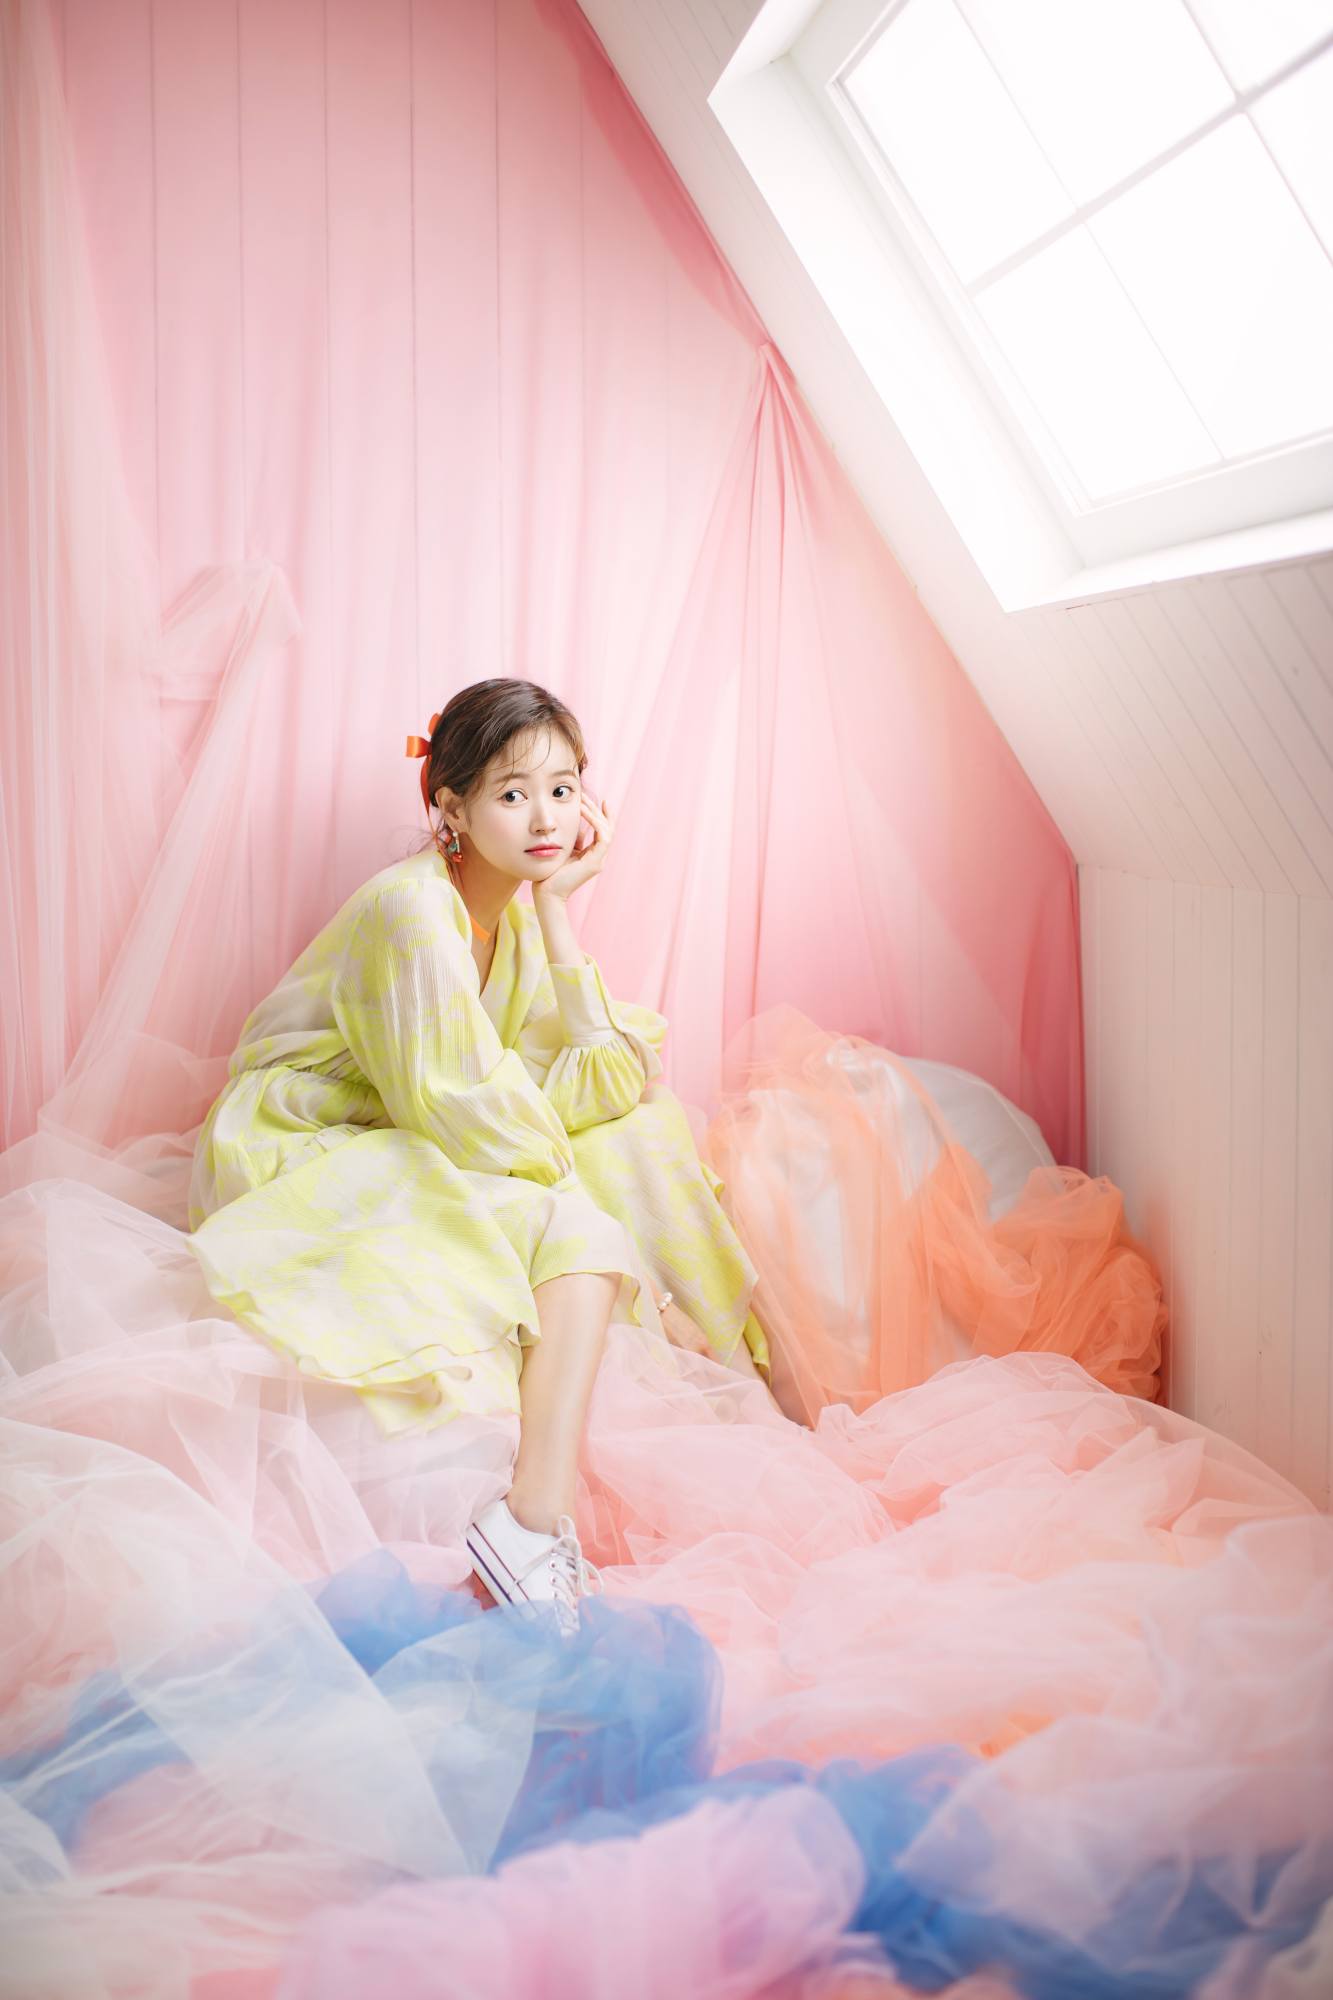 Chungdam Studio - Seoul Wedding Photographer | OneThreeOneFour